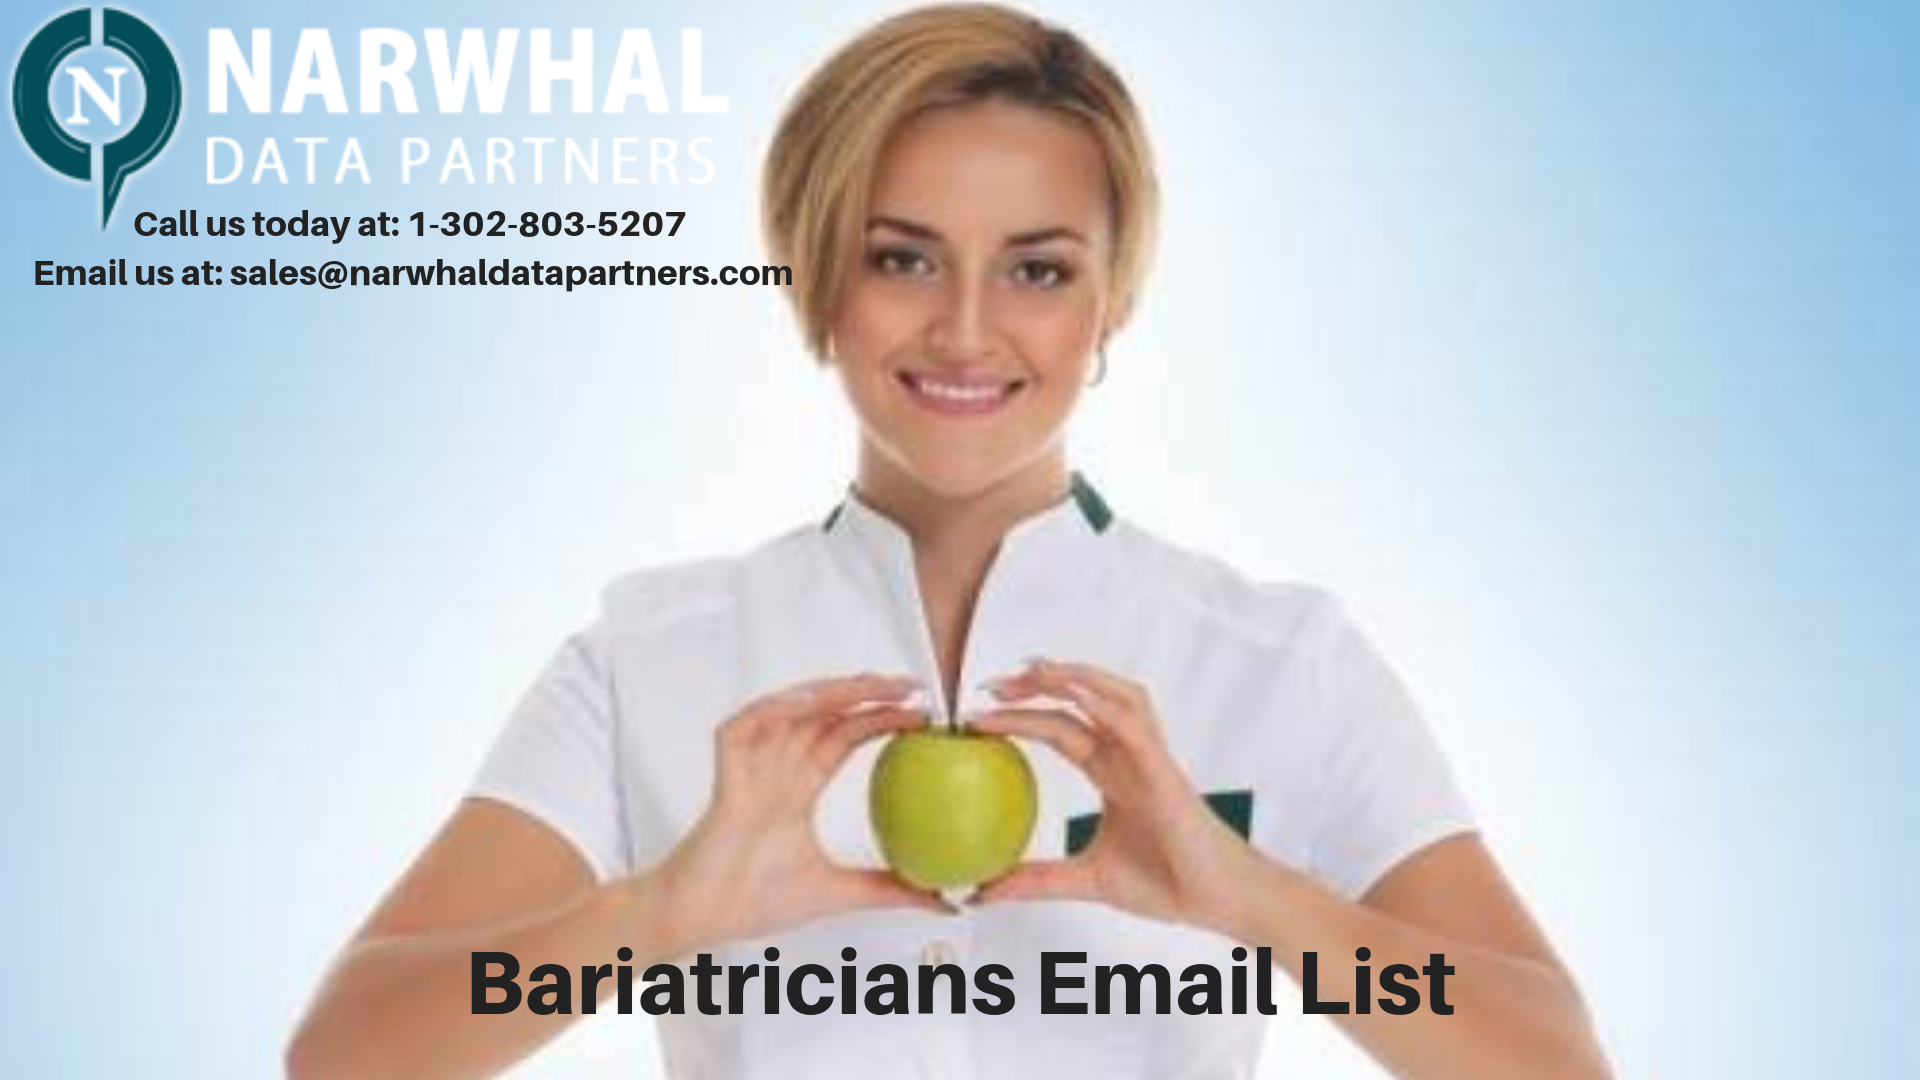 http://narwhaldatapartners.com/bariatricians-email-list.html